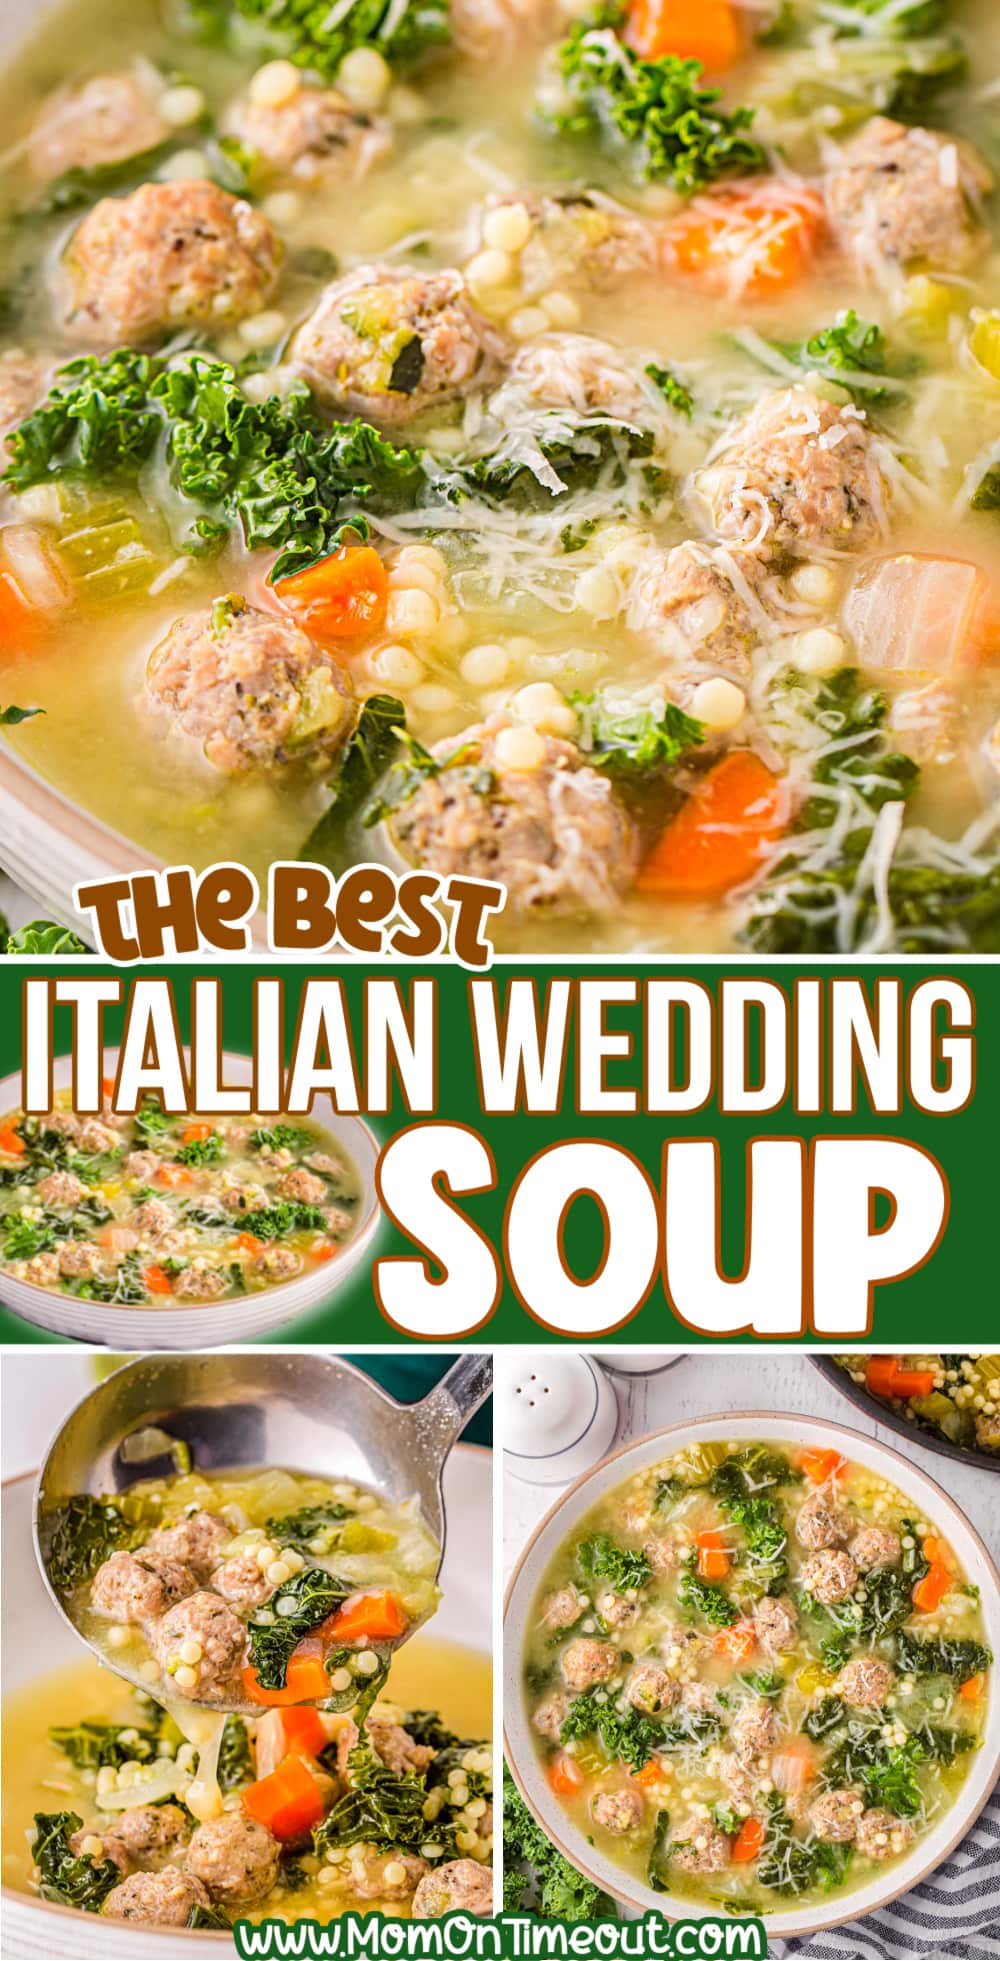 Italian Wedding Soup Recipe - Mom On Timeout